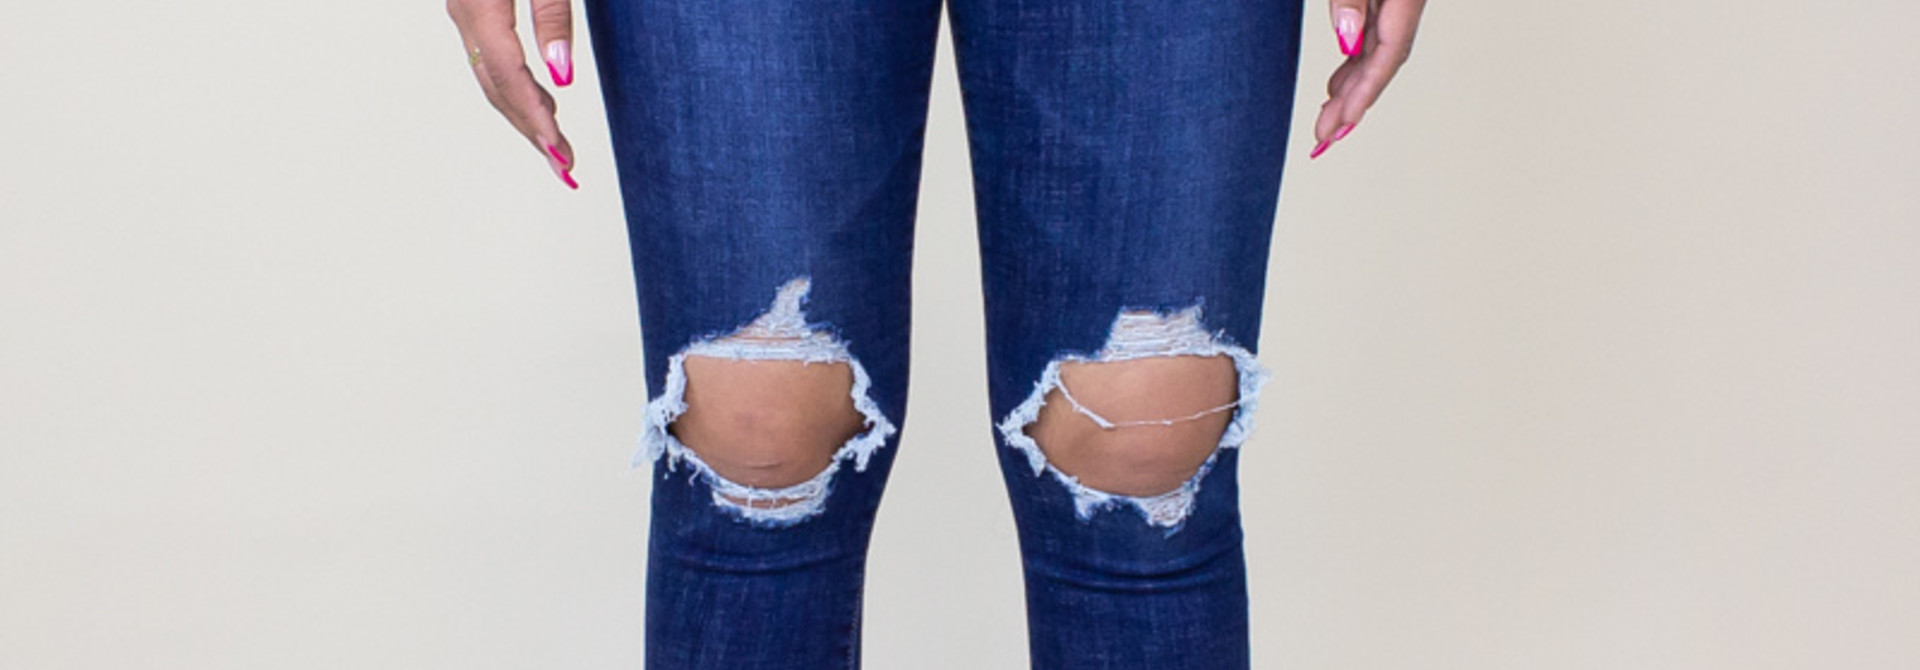 Levi's 711 Skinny Jeans - Maui Breeze